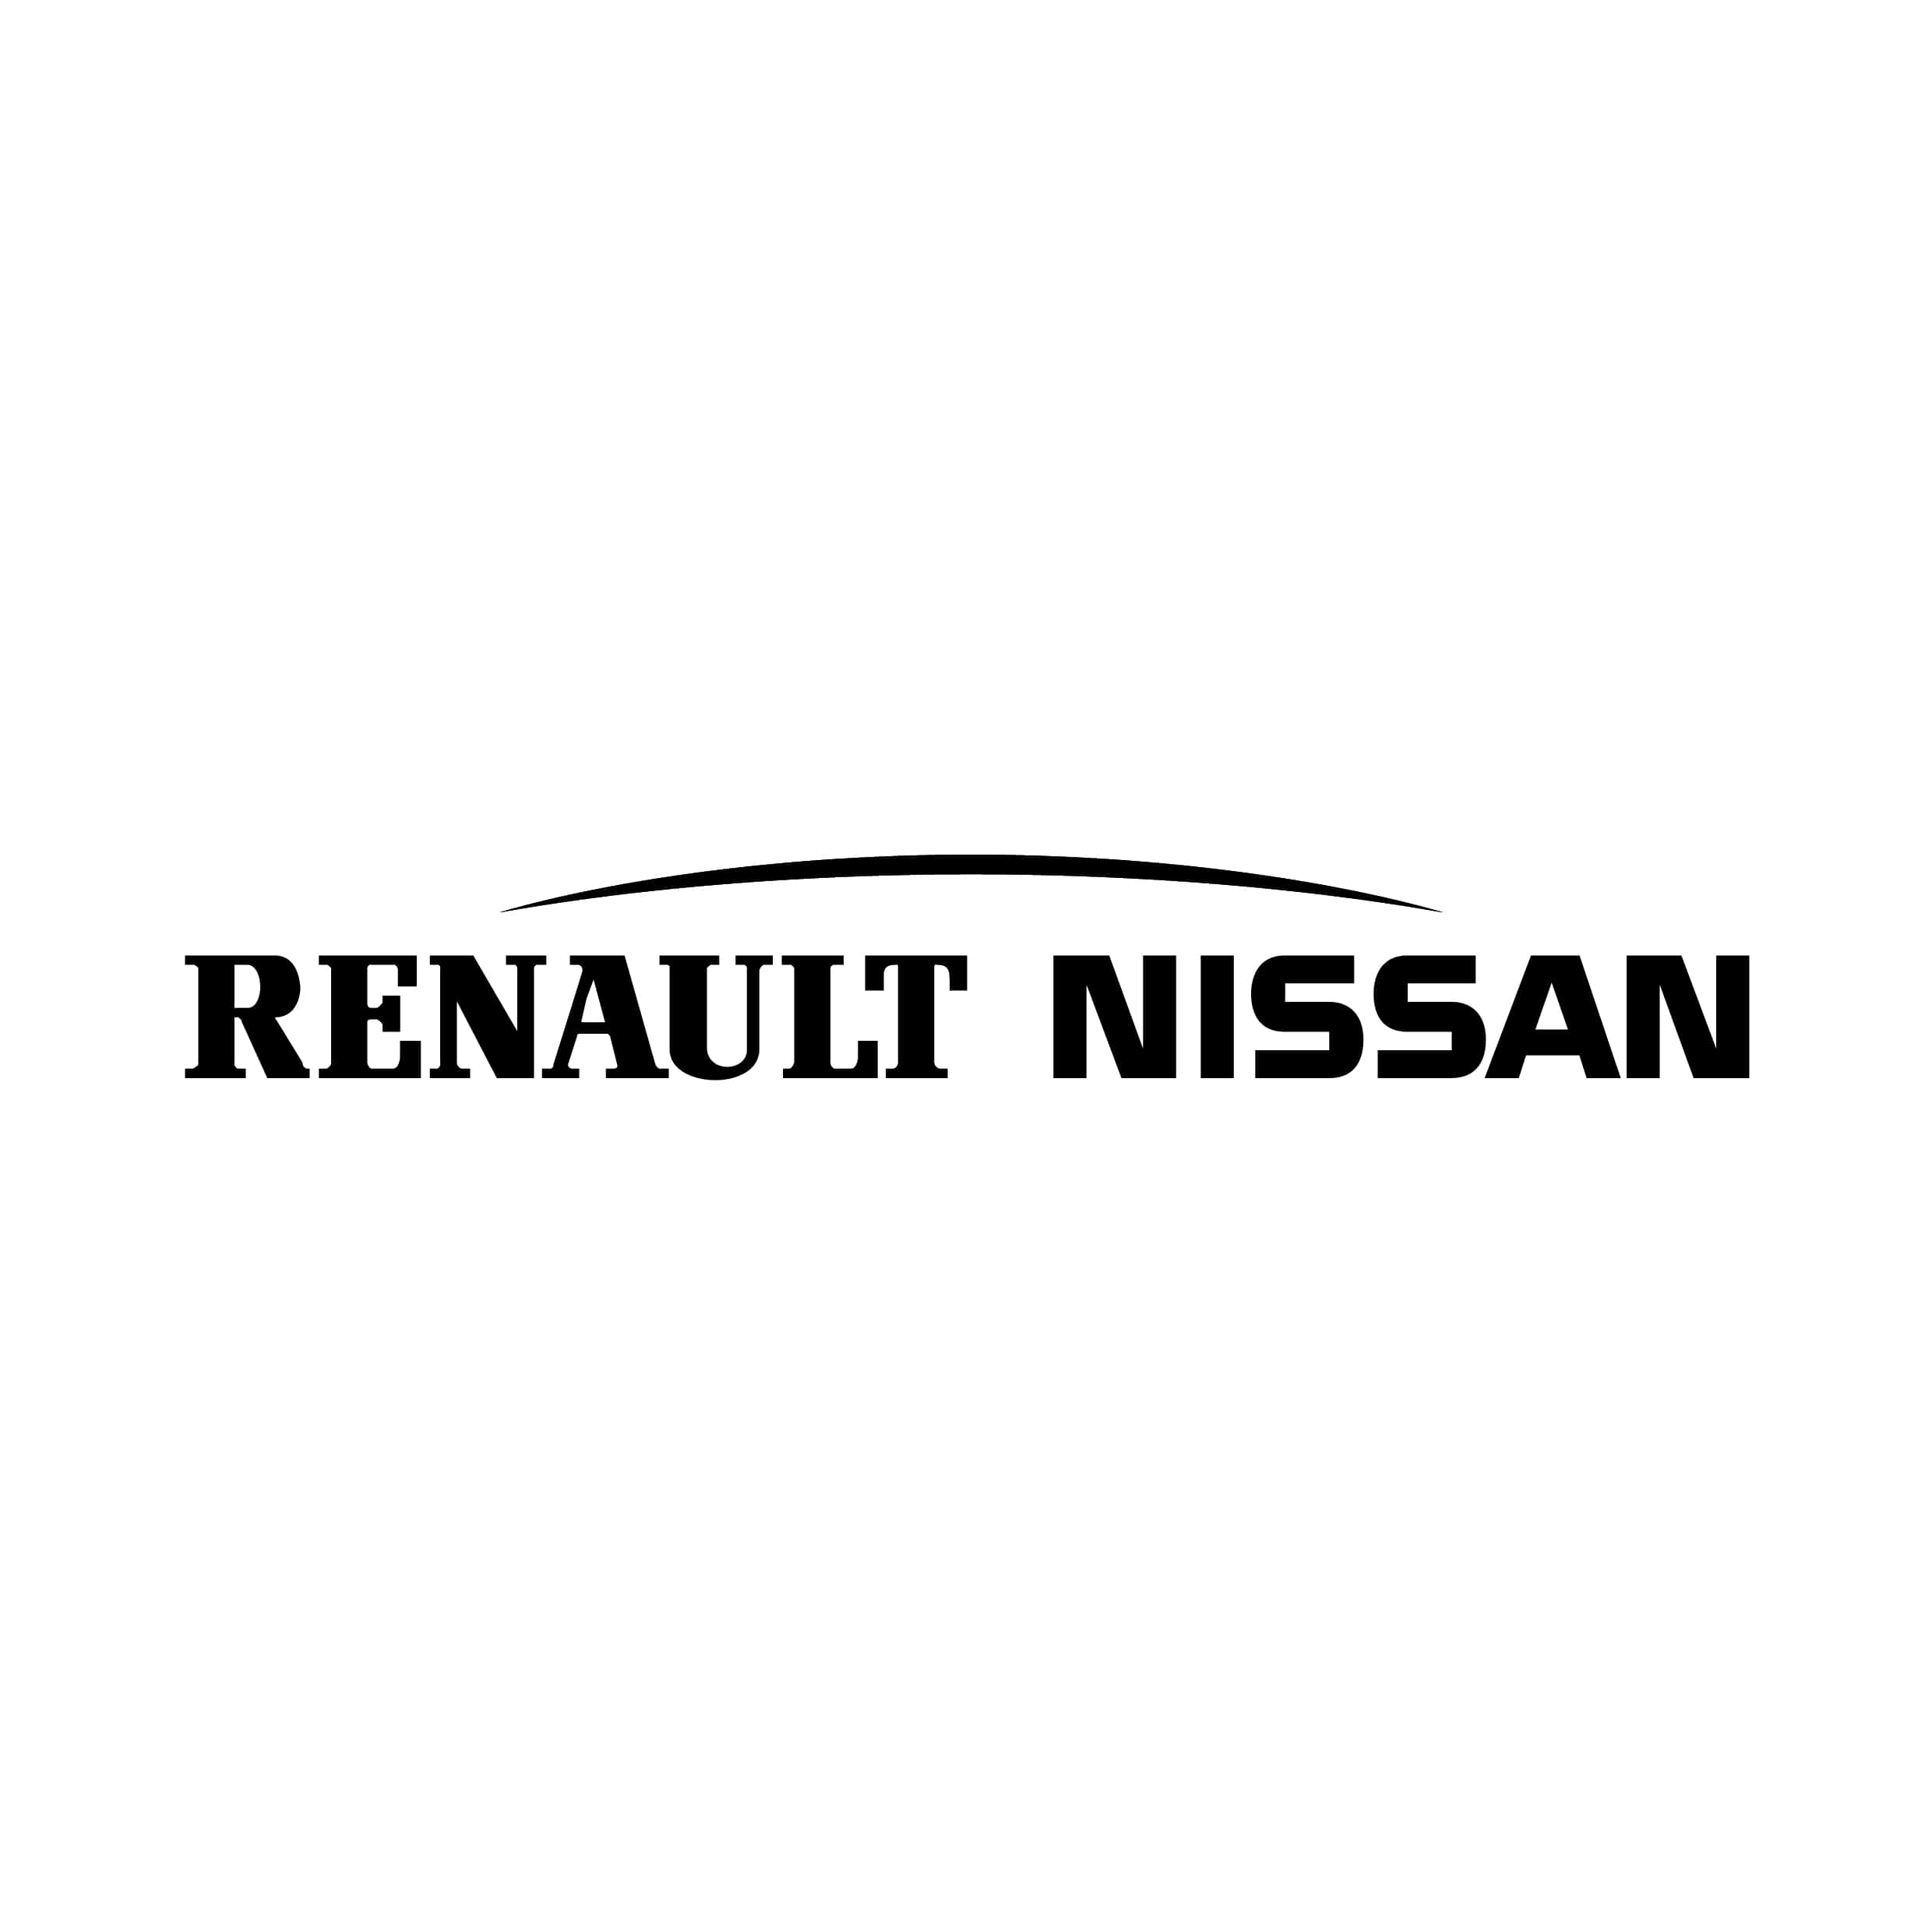 stickers-renault-nissan-ref128-autocollant-voiture-sticker-auto-autocollants-decals-sponsors-racing-tuning-sport-logo-min